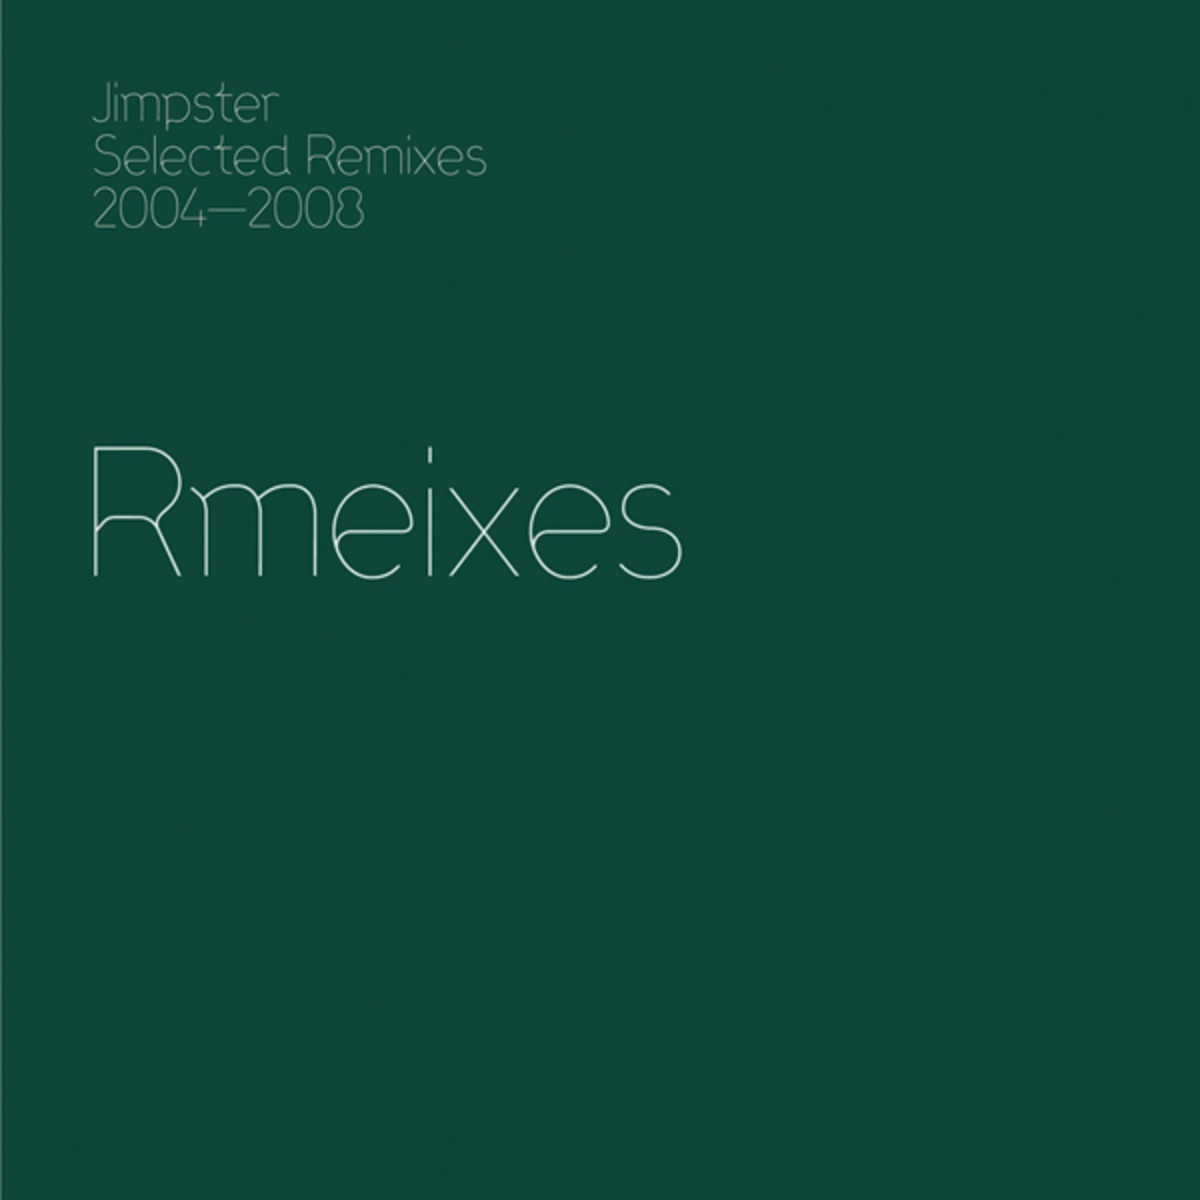 Jus Move - Jimpster Remix